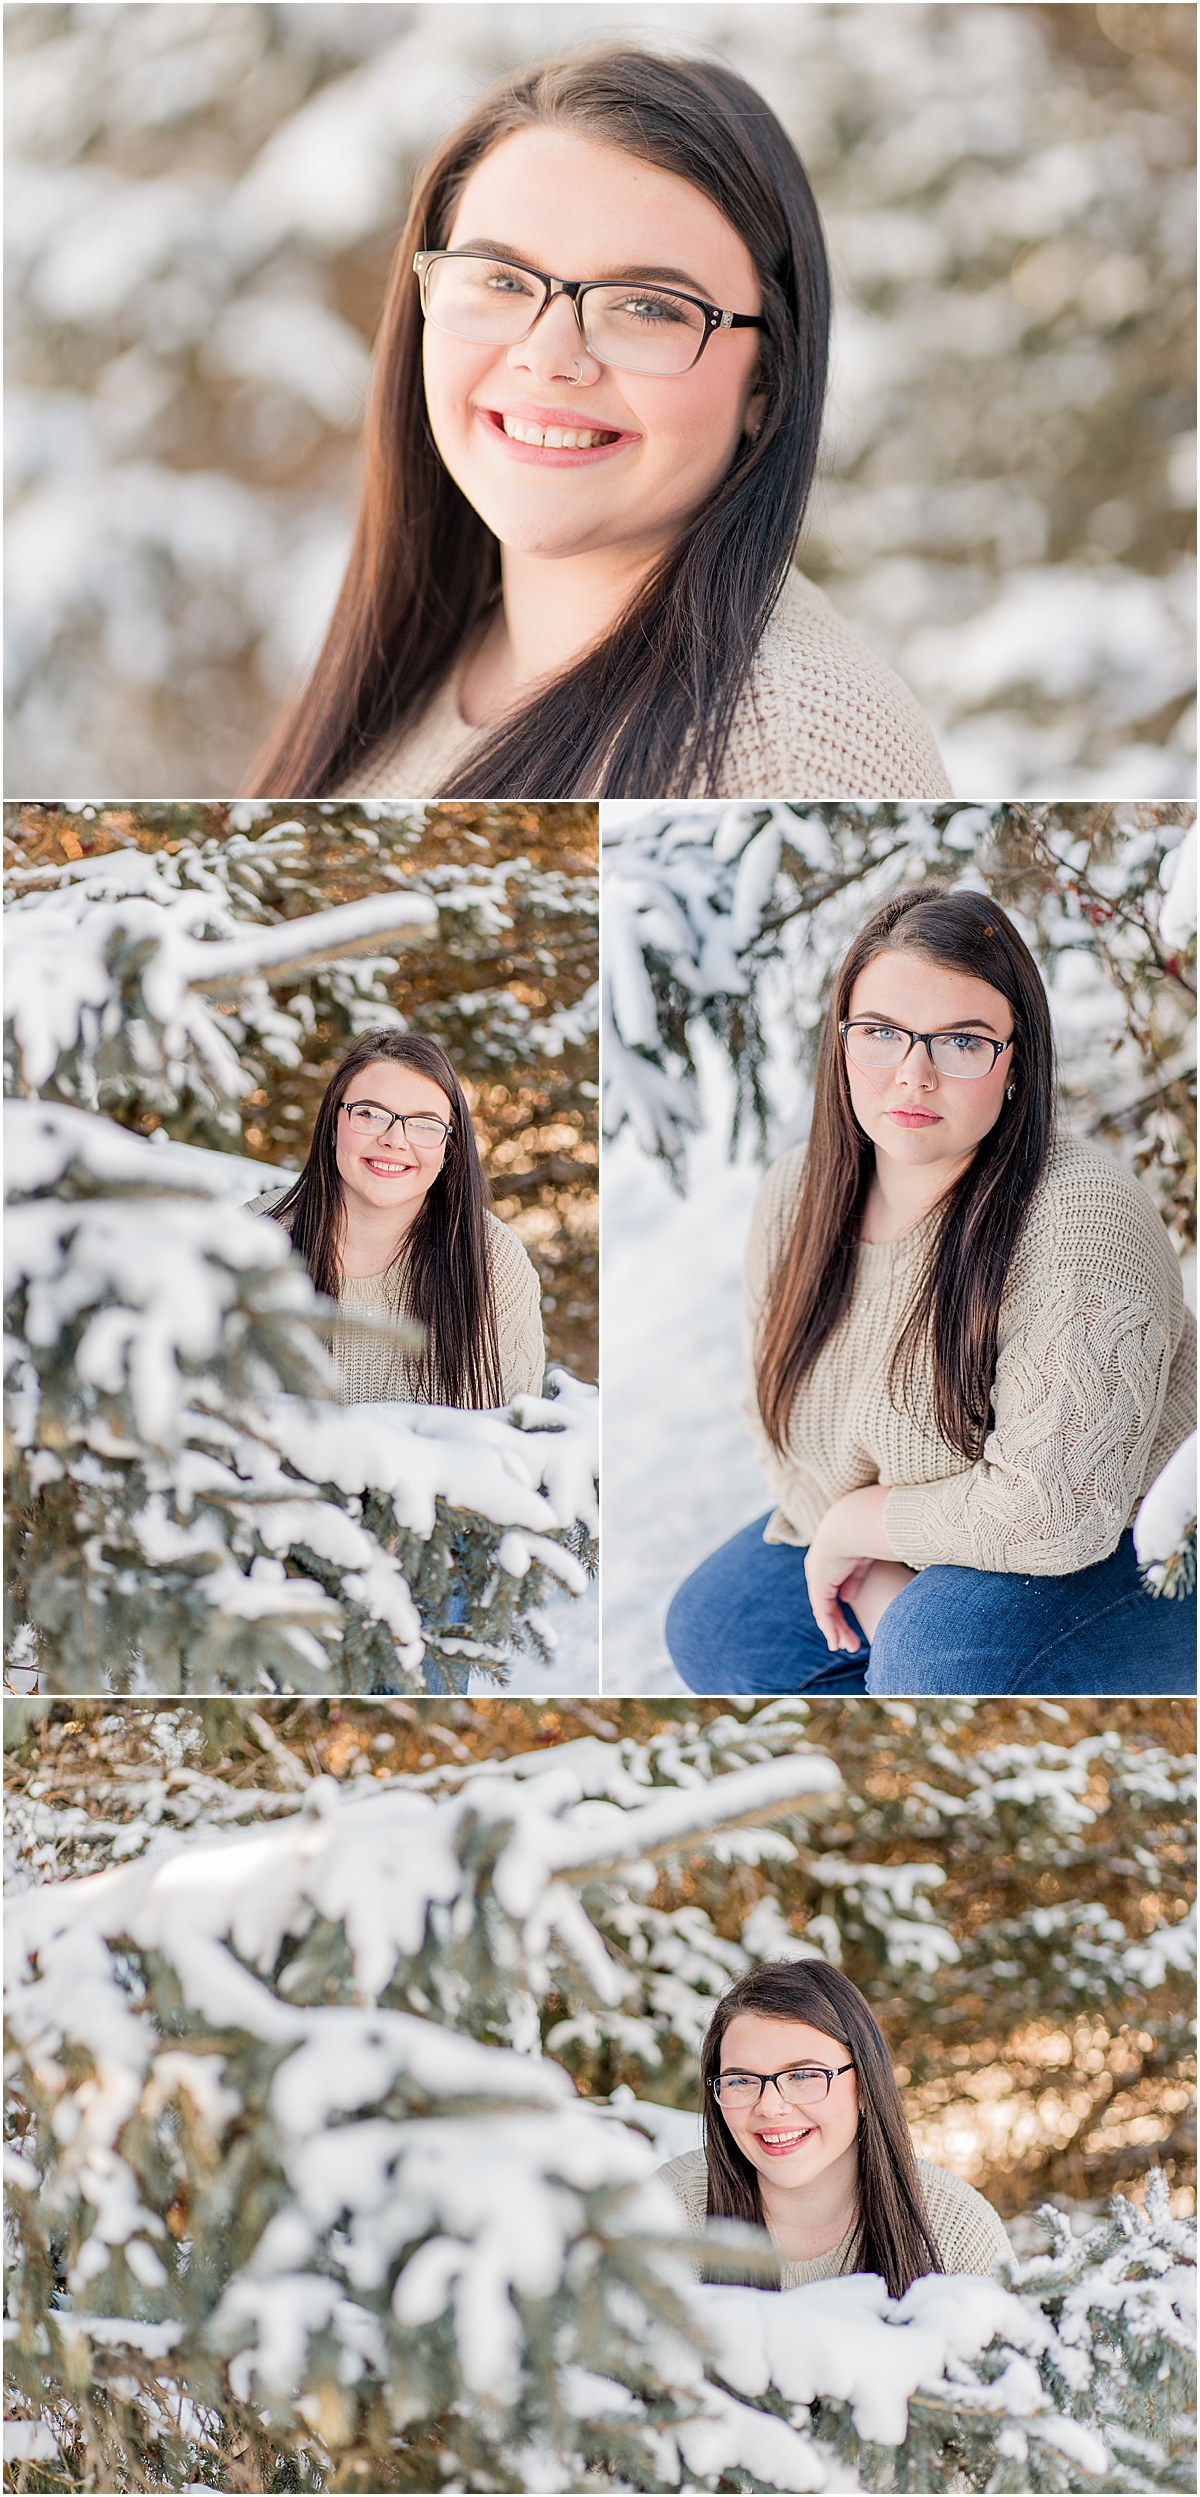 Senior photos in the snow